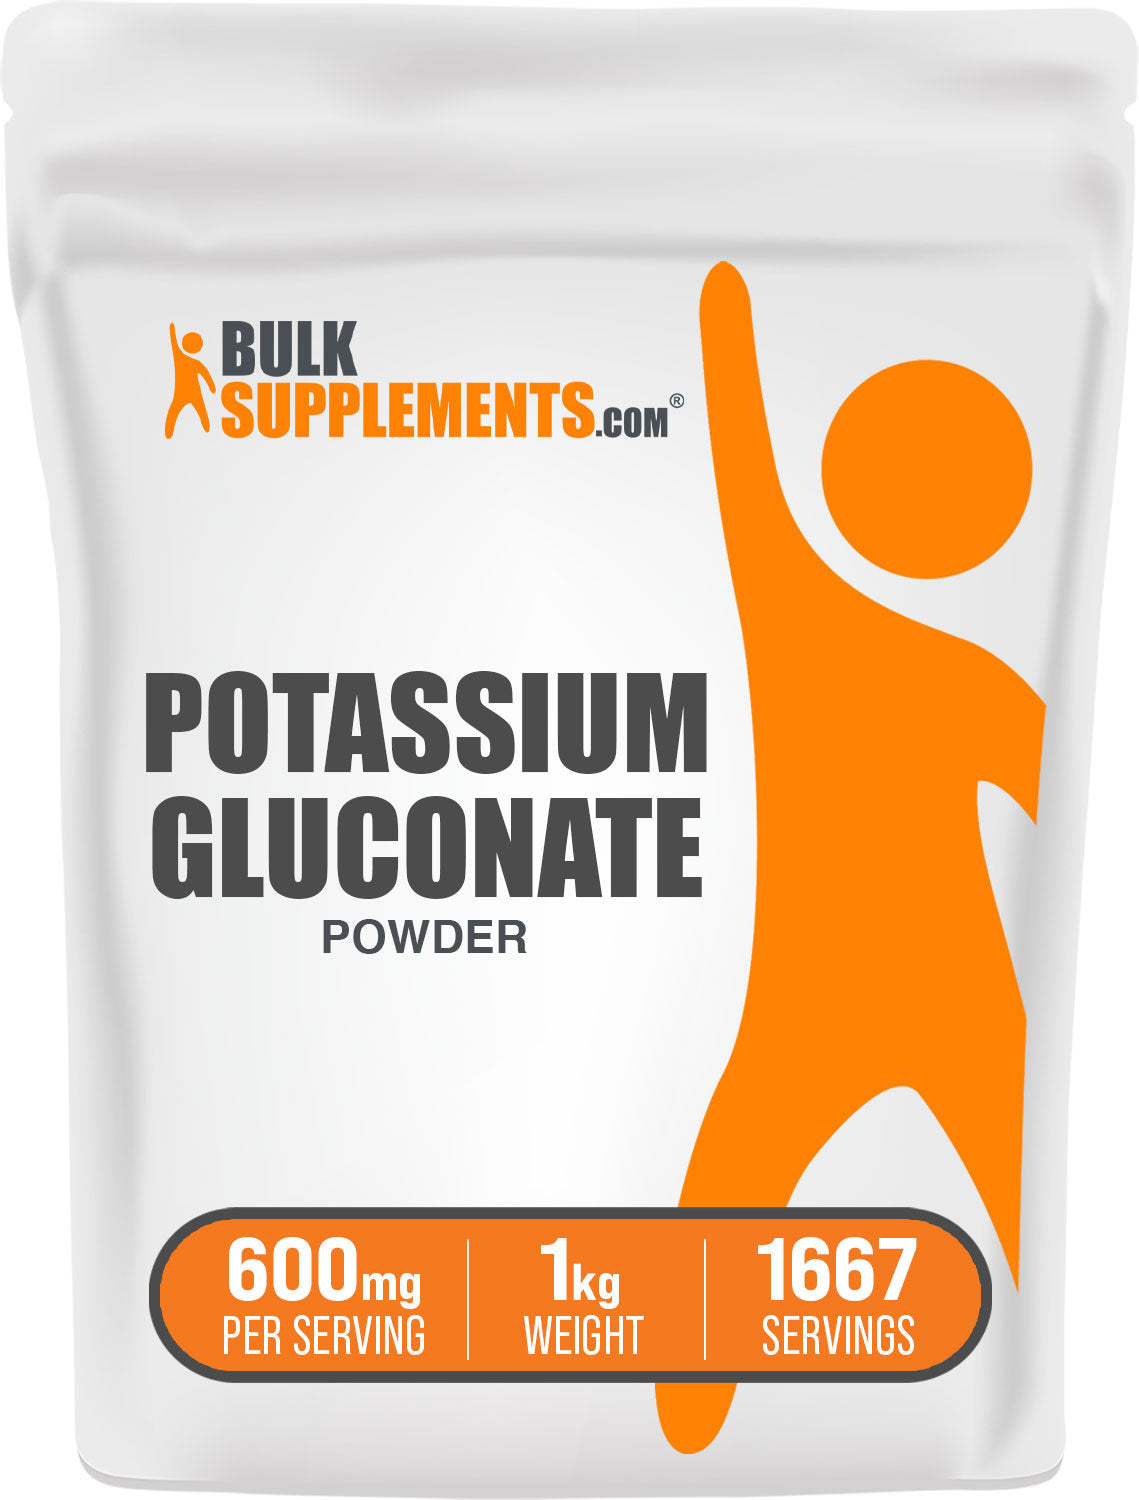 BulkSupplements.com Potassium Gluconate Powder 1kg bag